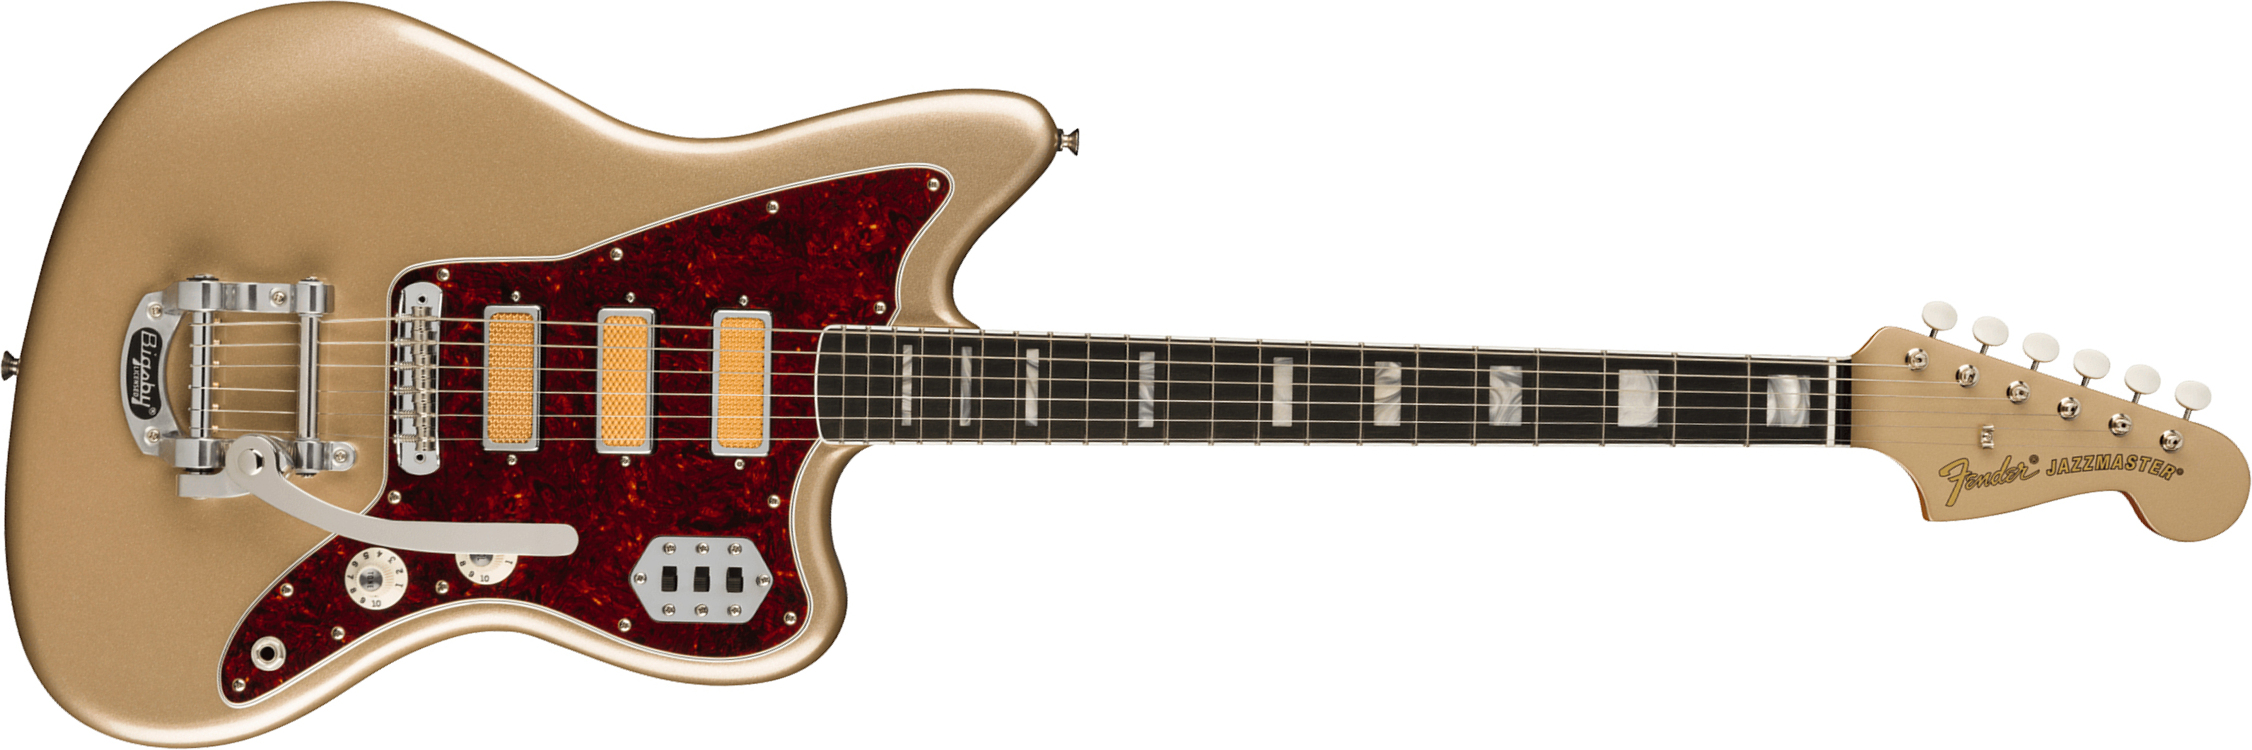 Fender Jazzmaster Gold Foil Ltd Mex 3mh Trem Bigsby Eb - Shoreline Gold - Retro-rock elektrische gitaar - Main picture